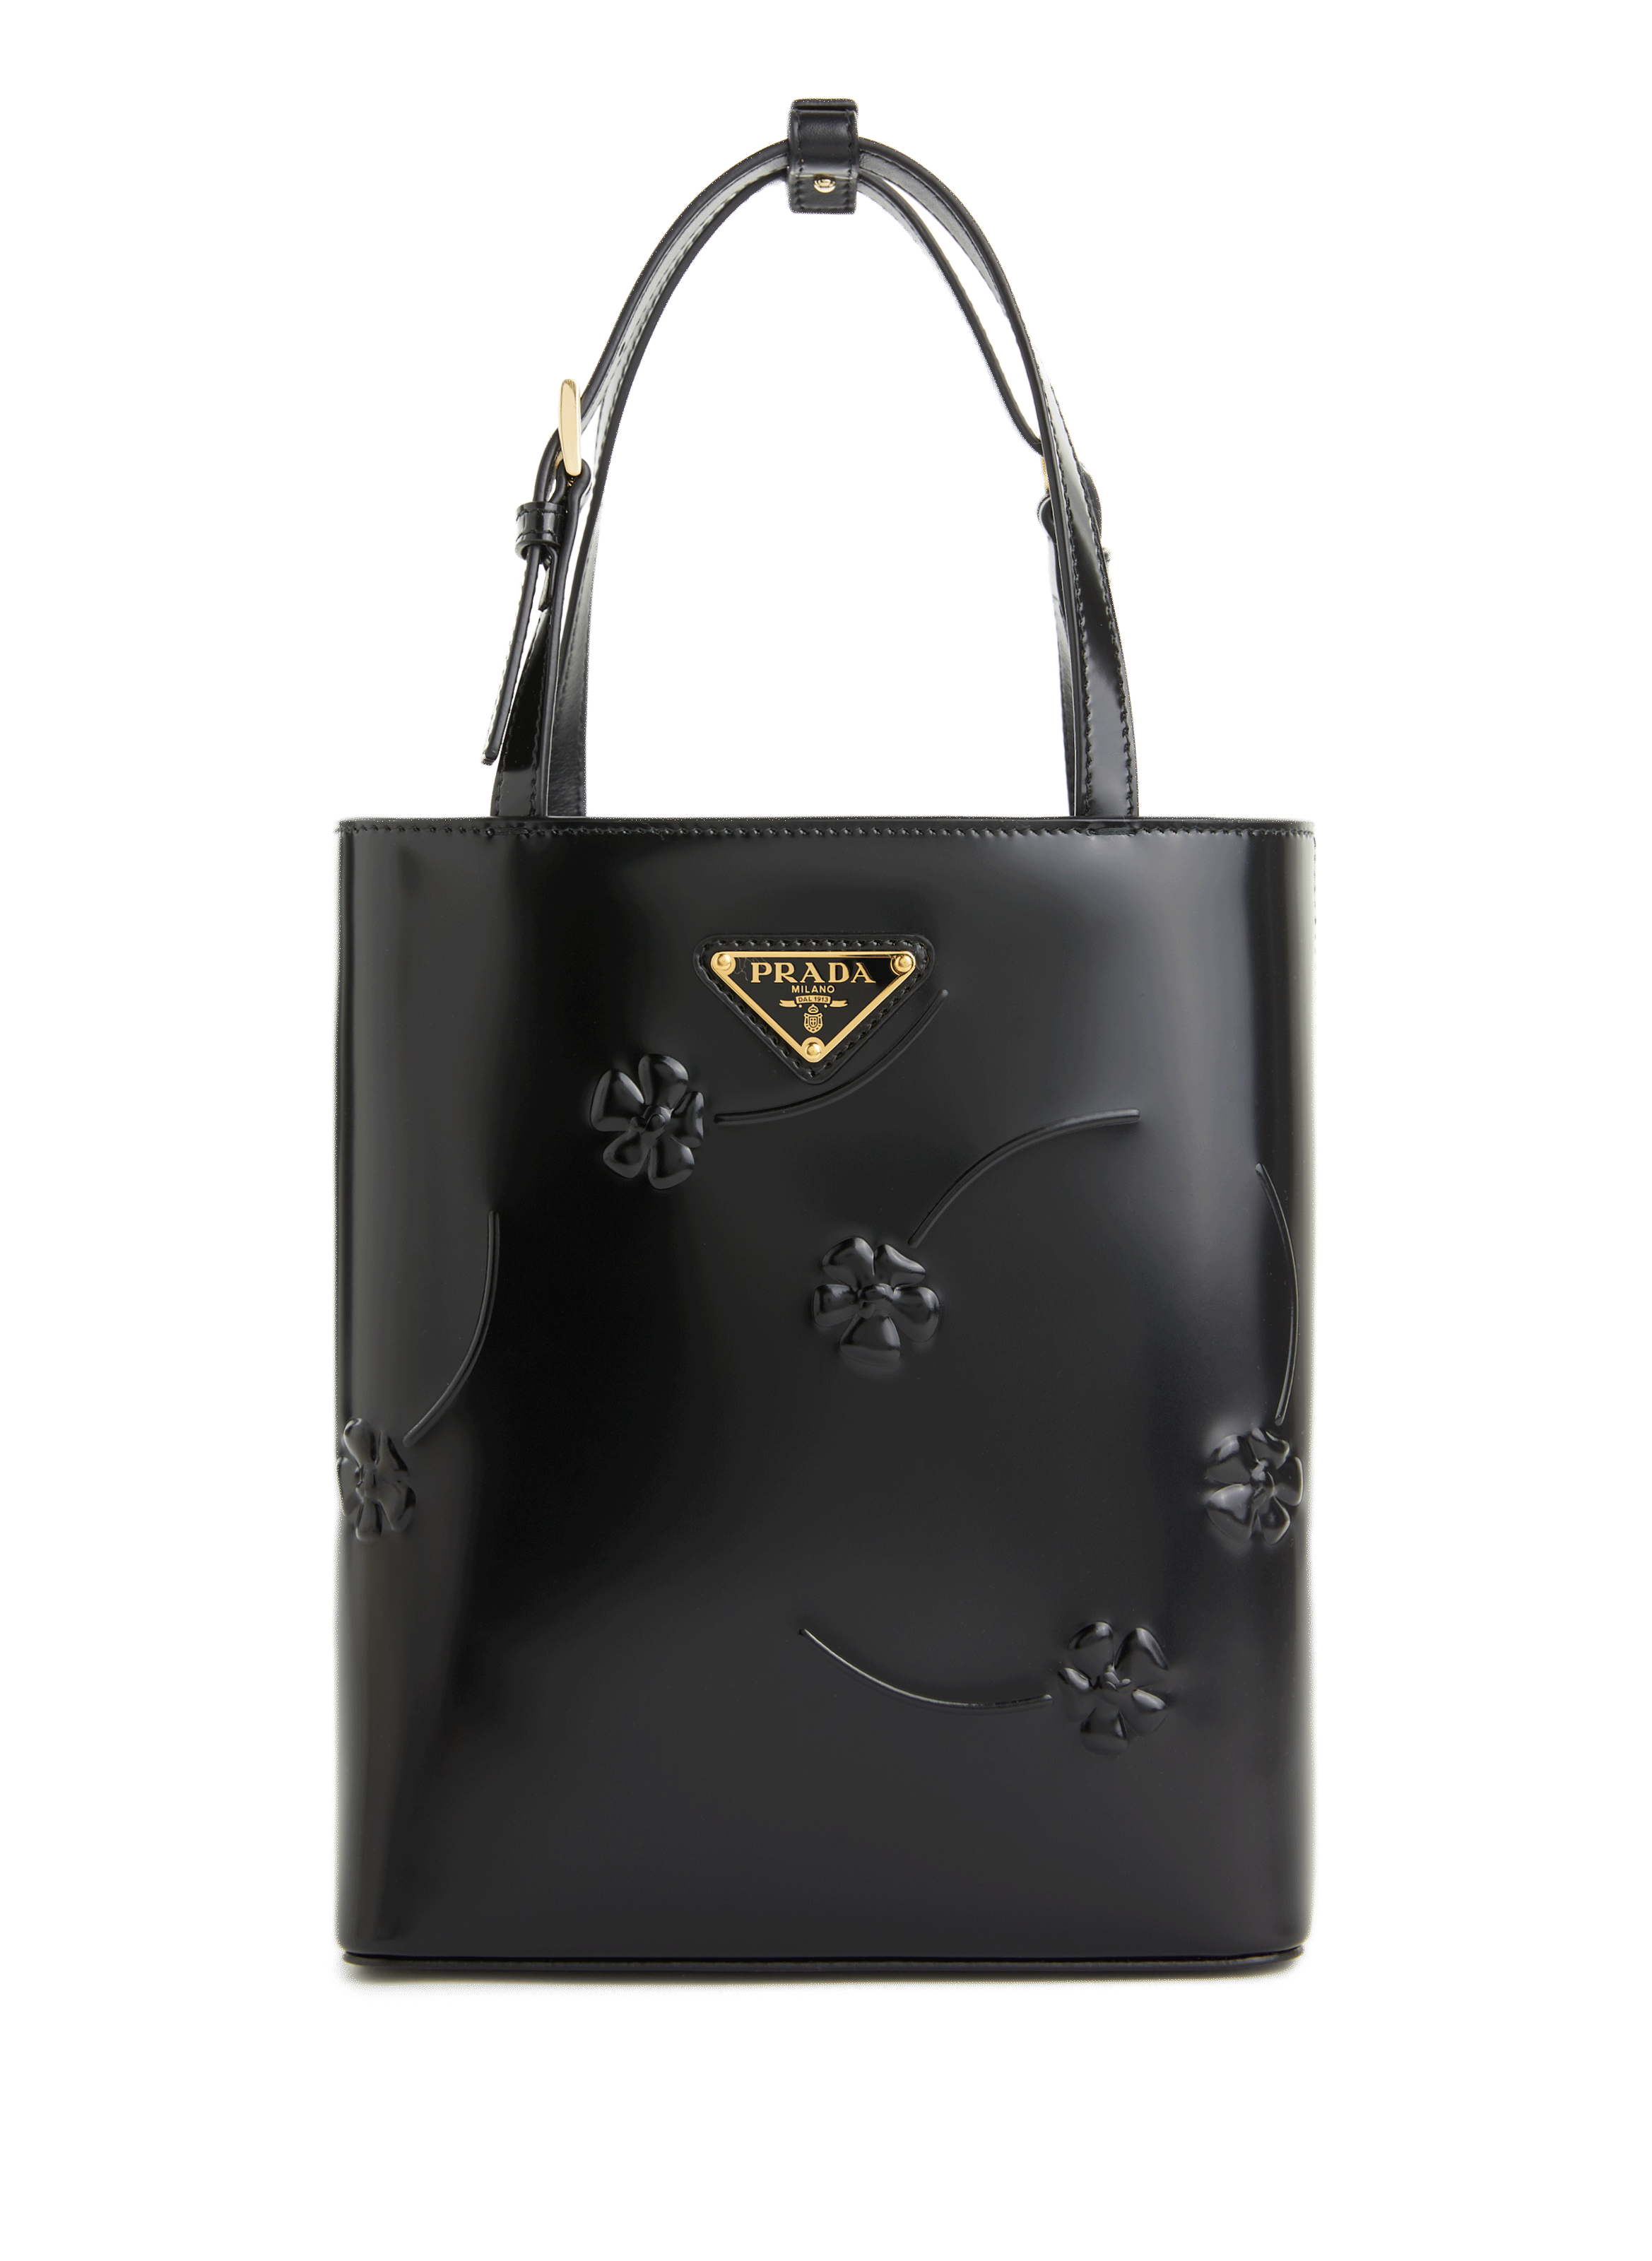 Shop Prada Buckle Medium Leather Handbag with Belt | Saks Fifth Avenue